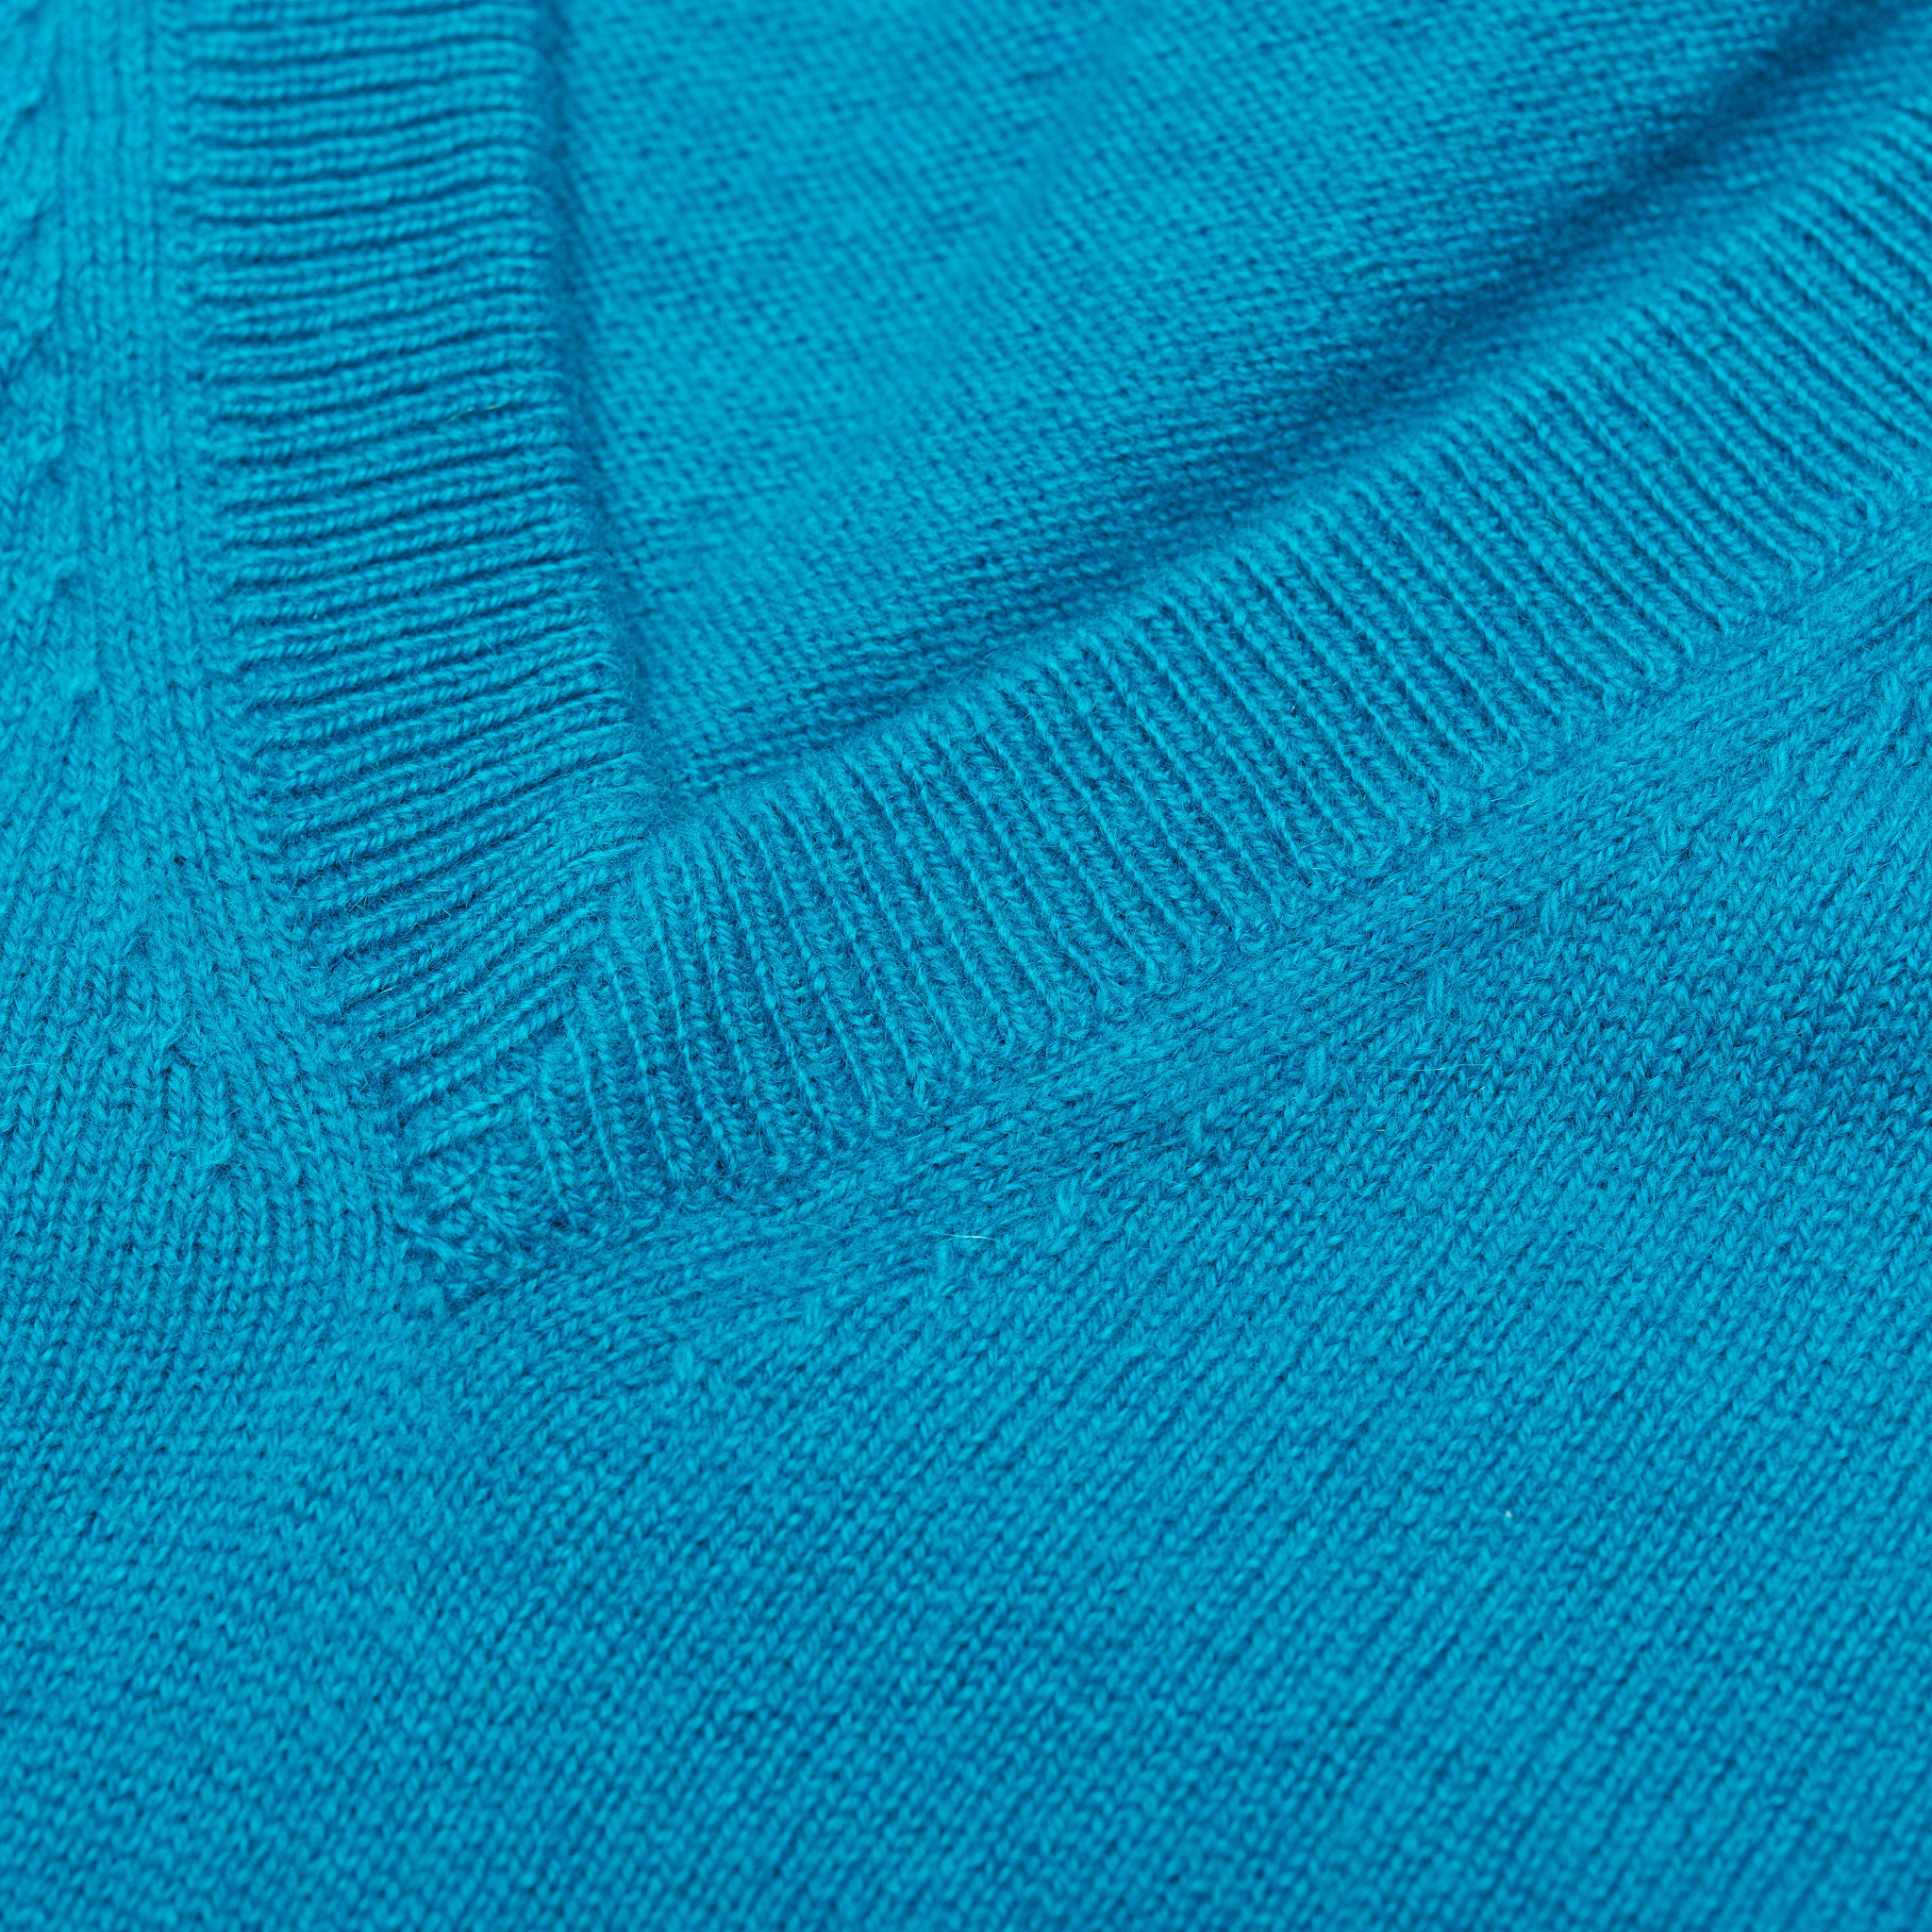 FEDELI Aqua Blue Cashmere V-Neck Sweater NEW FEDELI